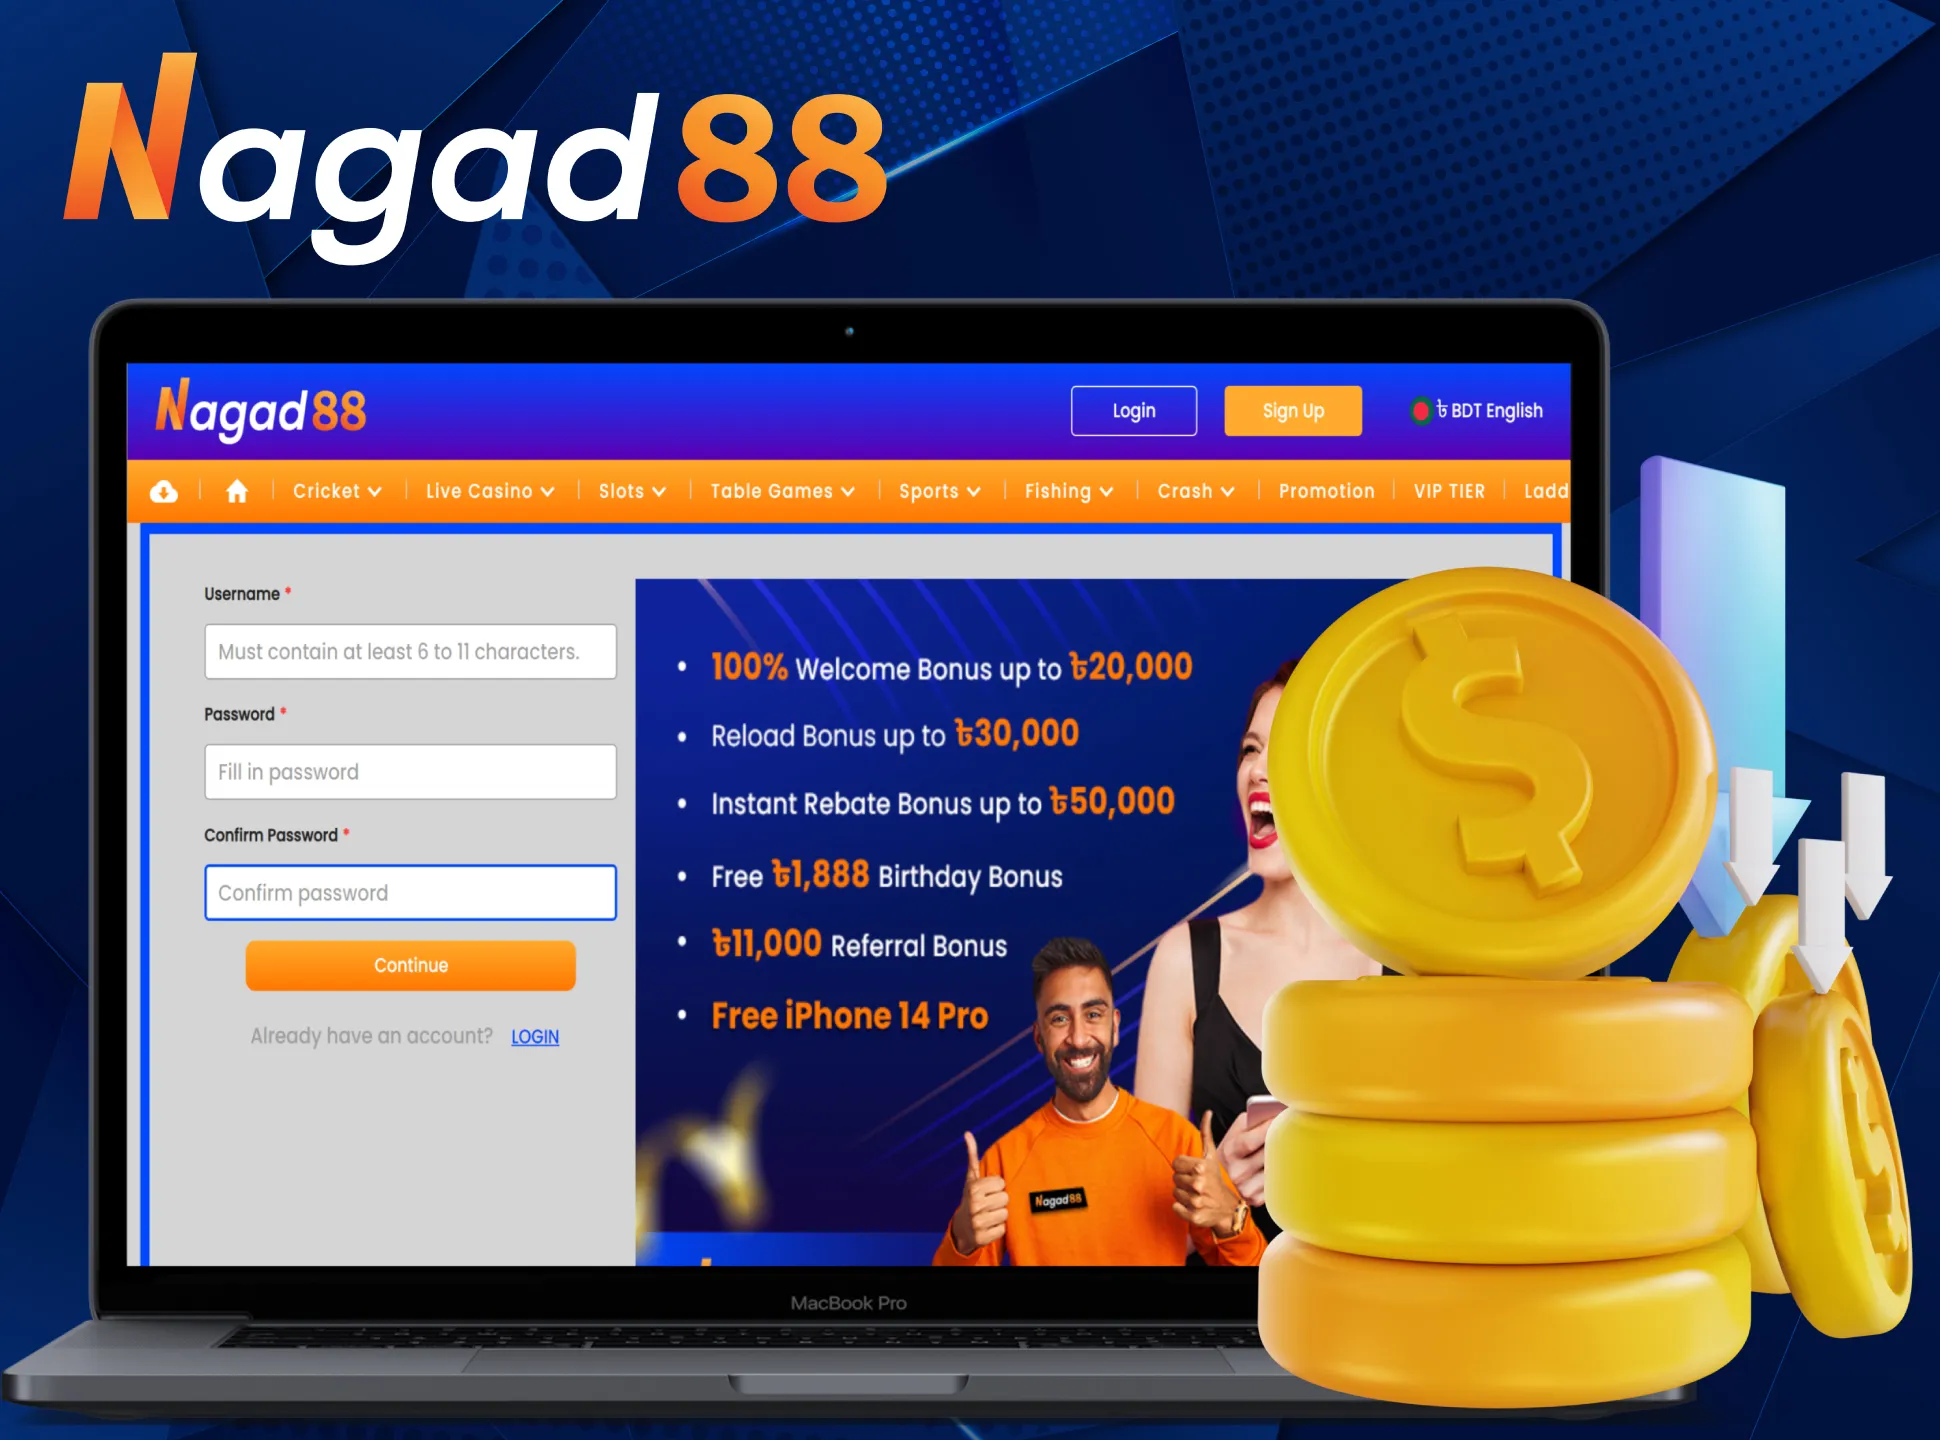 Complete a simple registration on Nagad88.